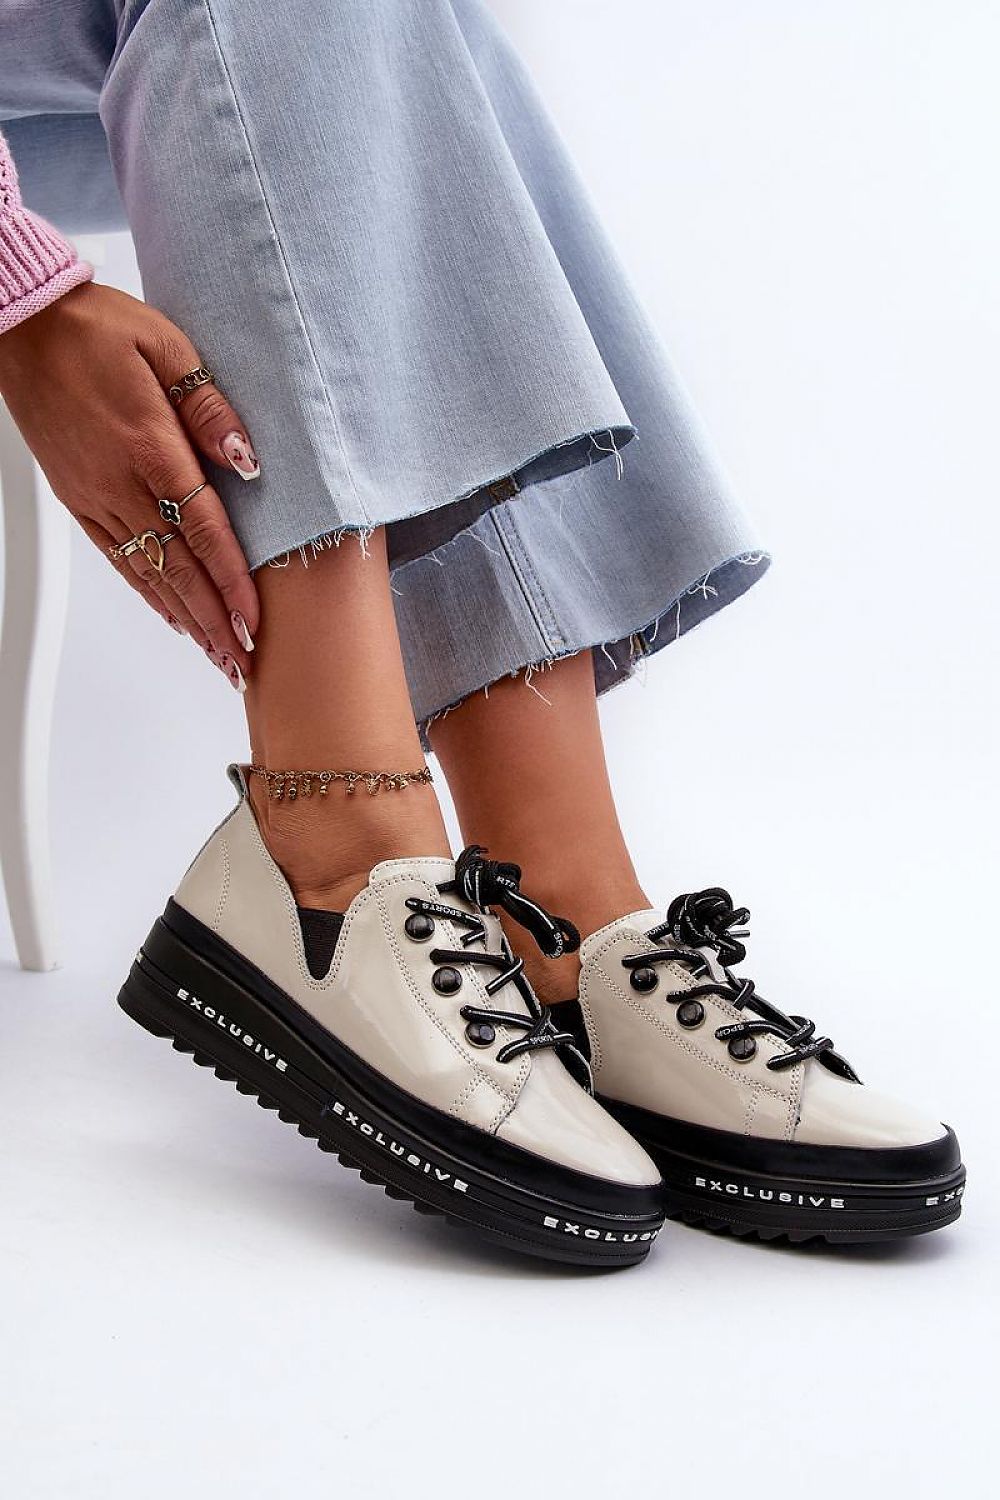 TEEK - Exclusive Patent Leather Platform Womens Shoes SHOES TEEK MH beige 6.5 